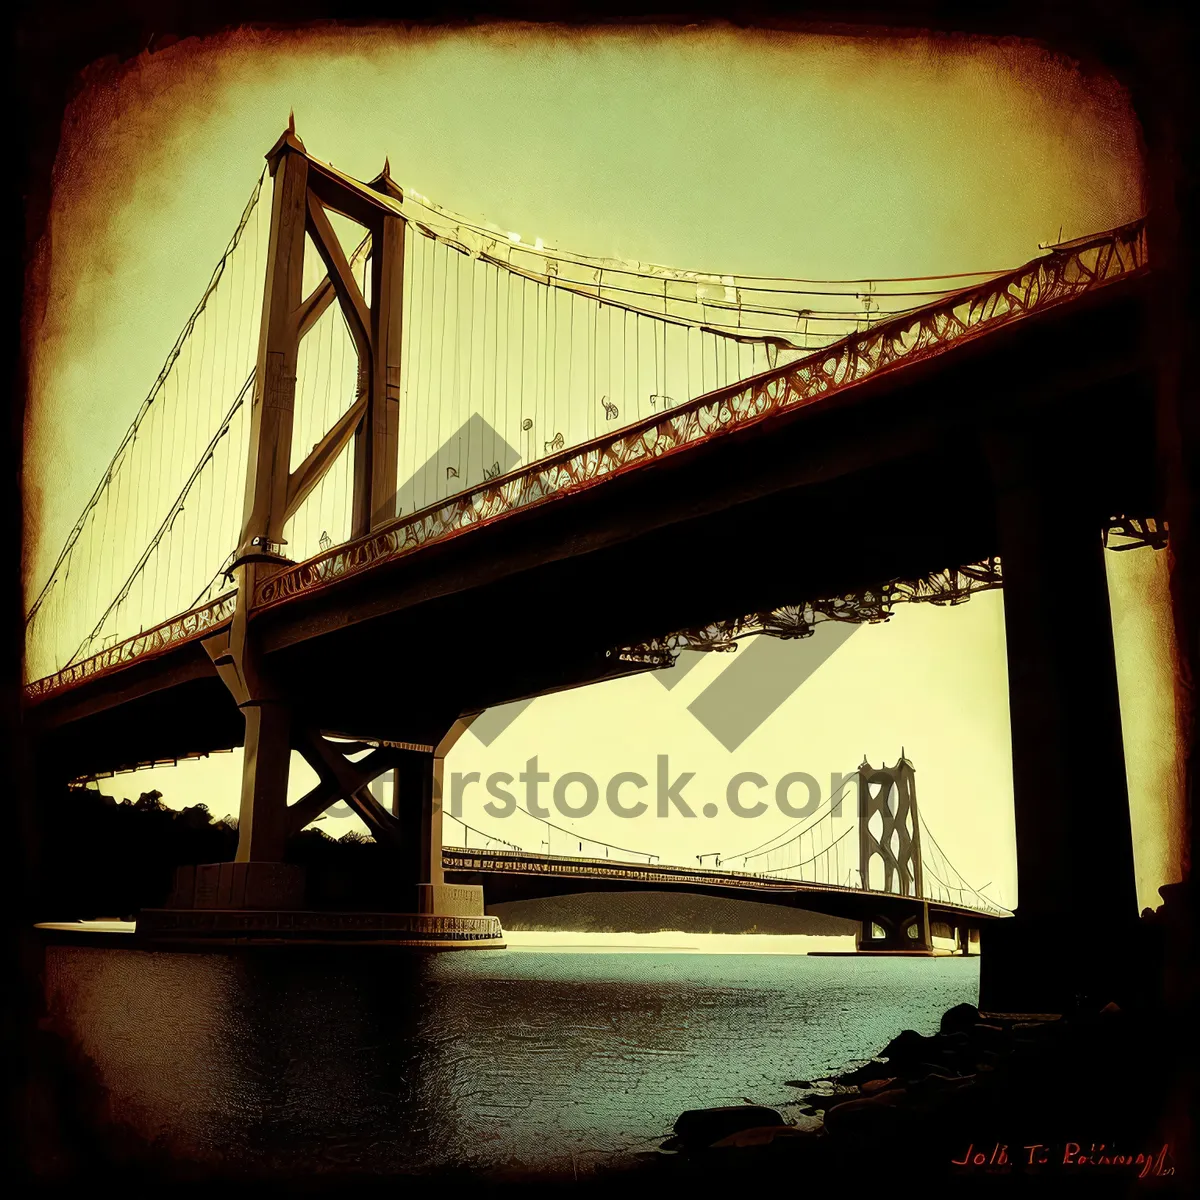 Picture of Golden Gate Bridge at Dusk: Iconic Suspension Bridge in San Francisco